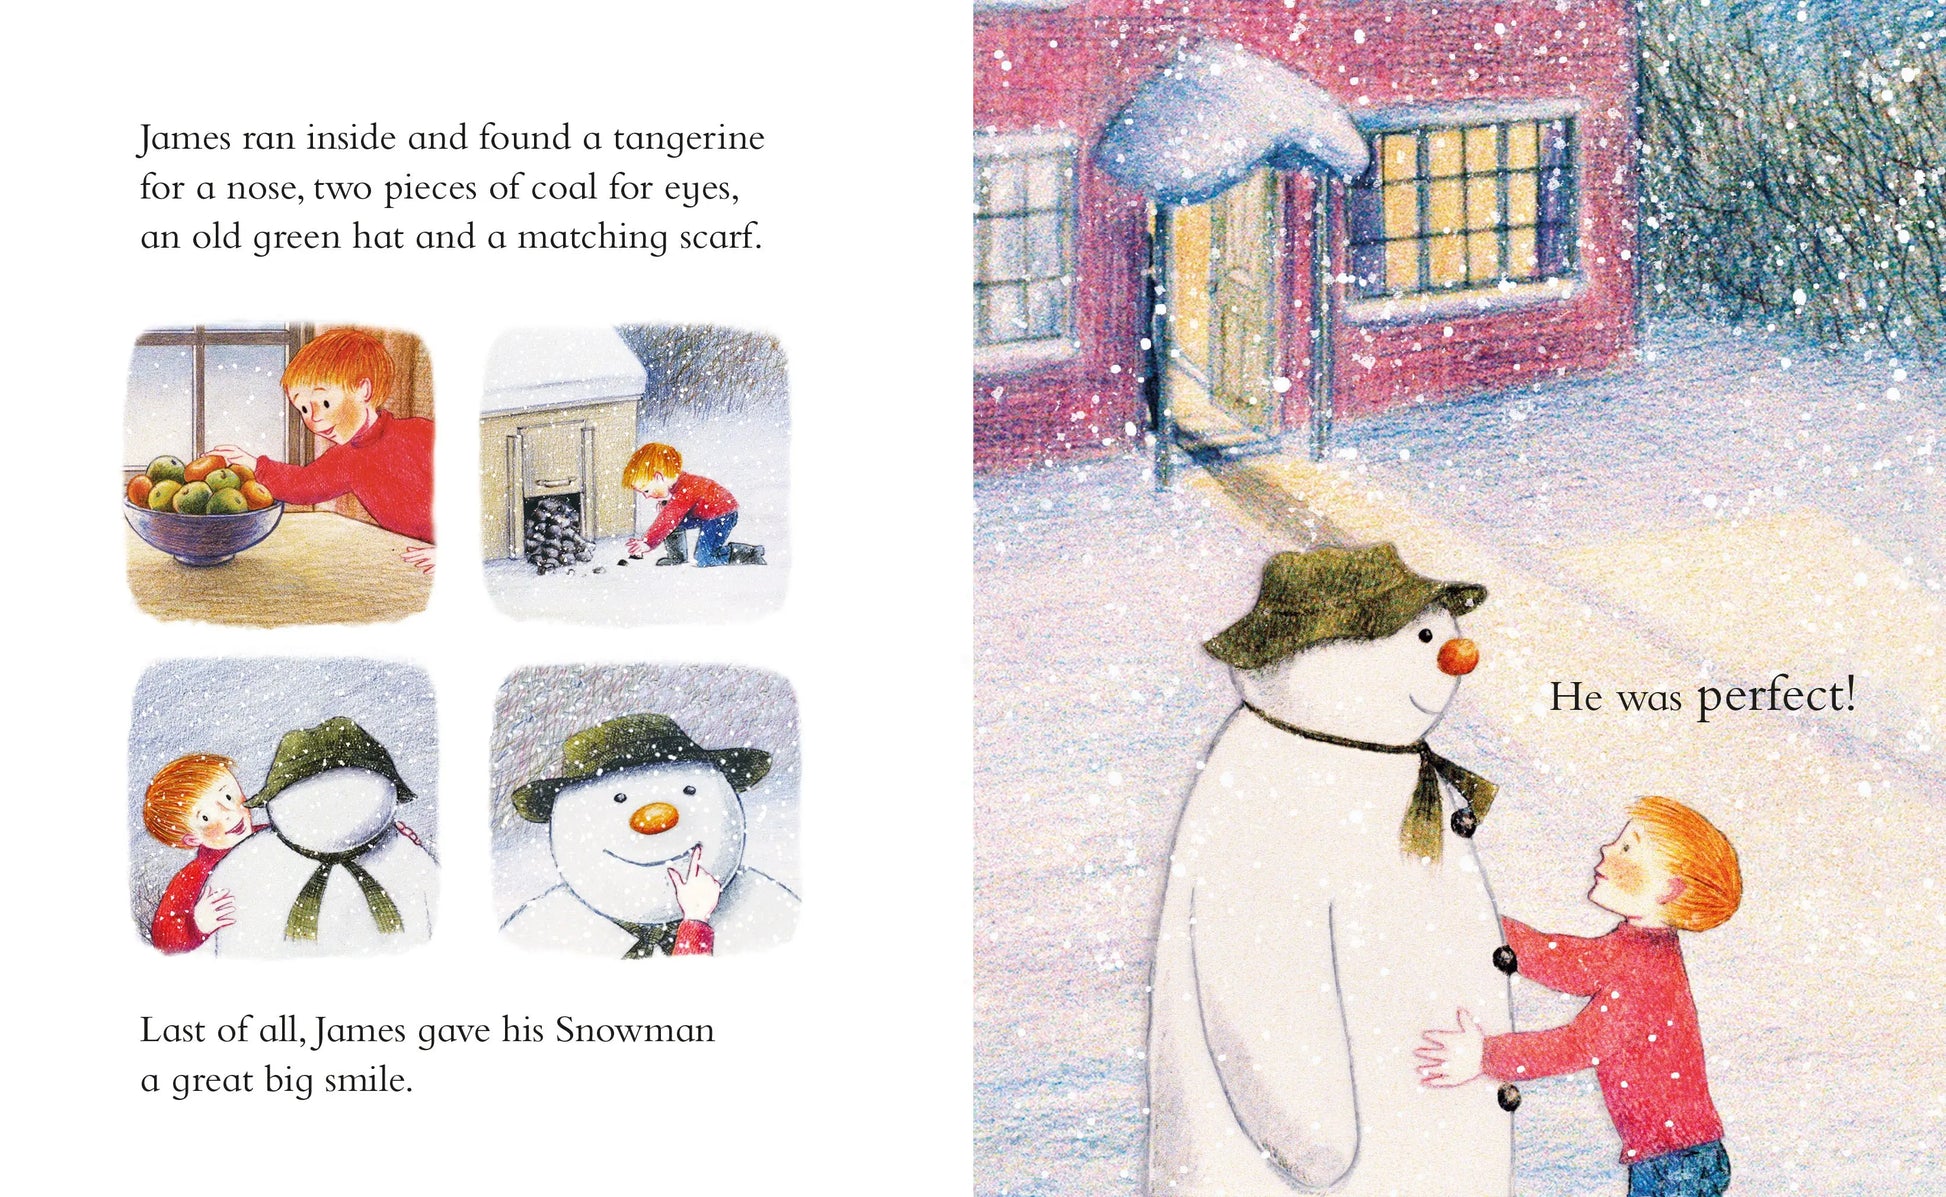 The Snowman - Bookspeed - The Forgotten Toy Shop